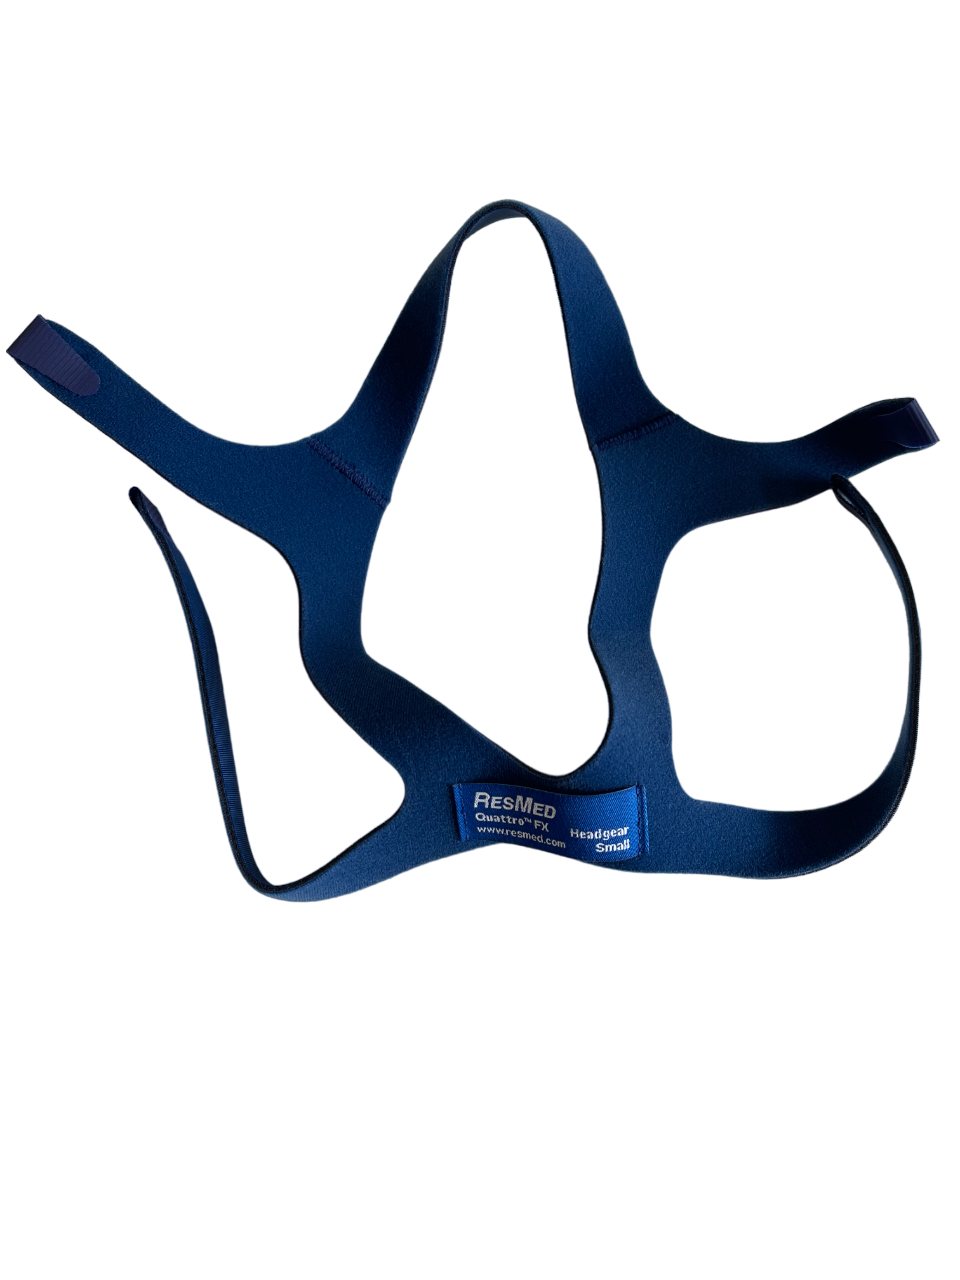 Resmed Quattro FX Full Face Mask Headgear - No Insurance Medical Supplies